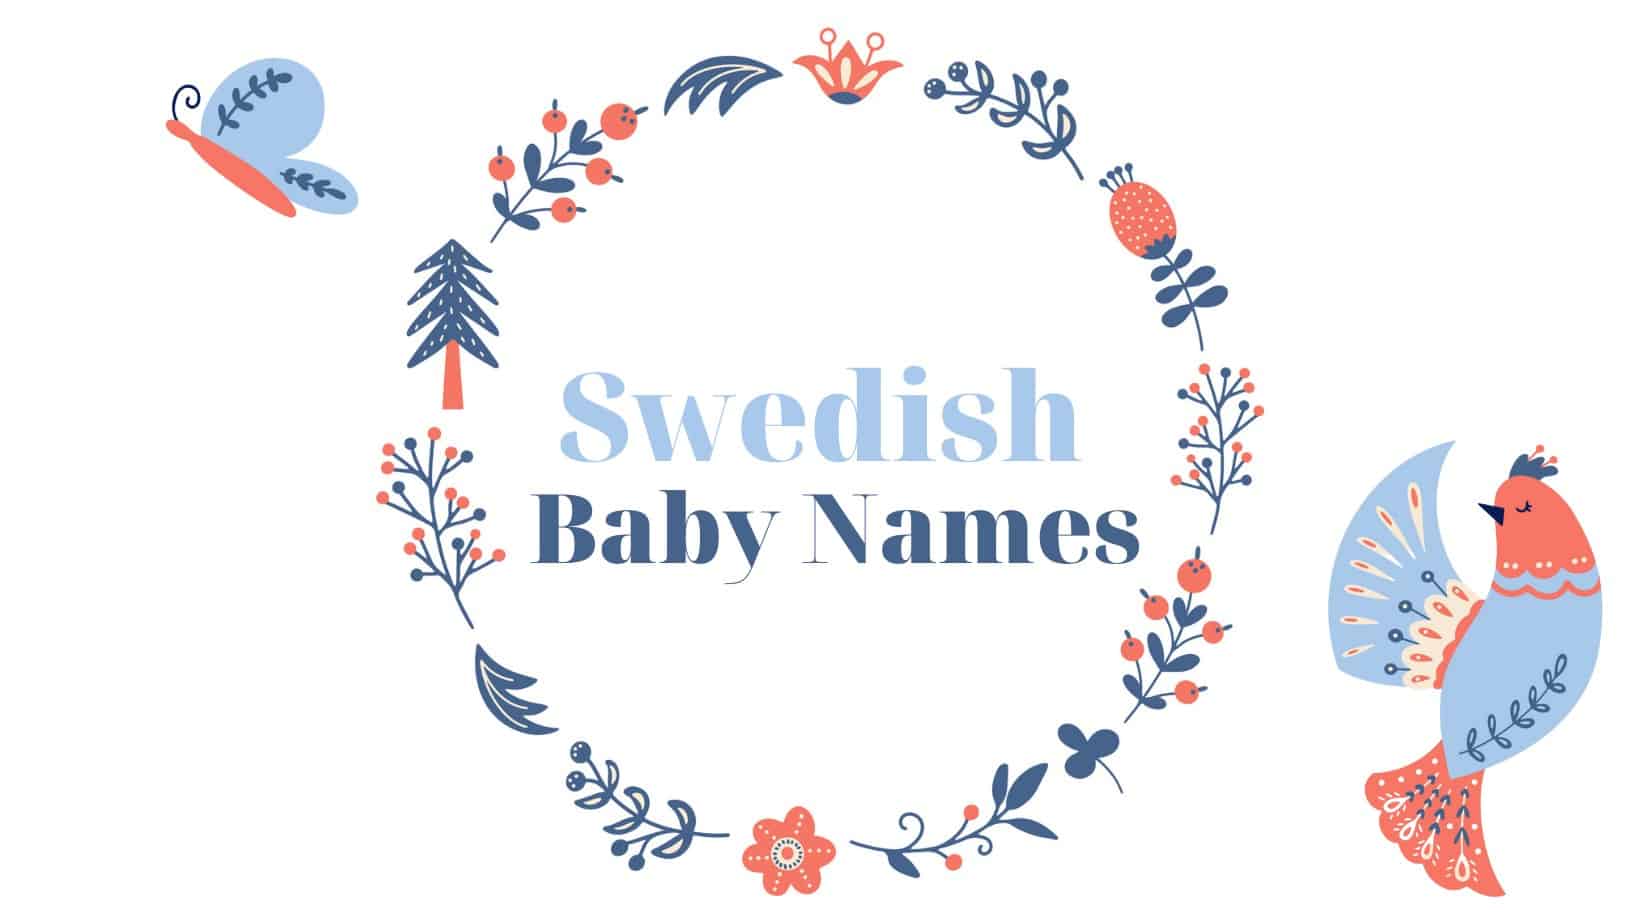 Swedish baby names